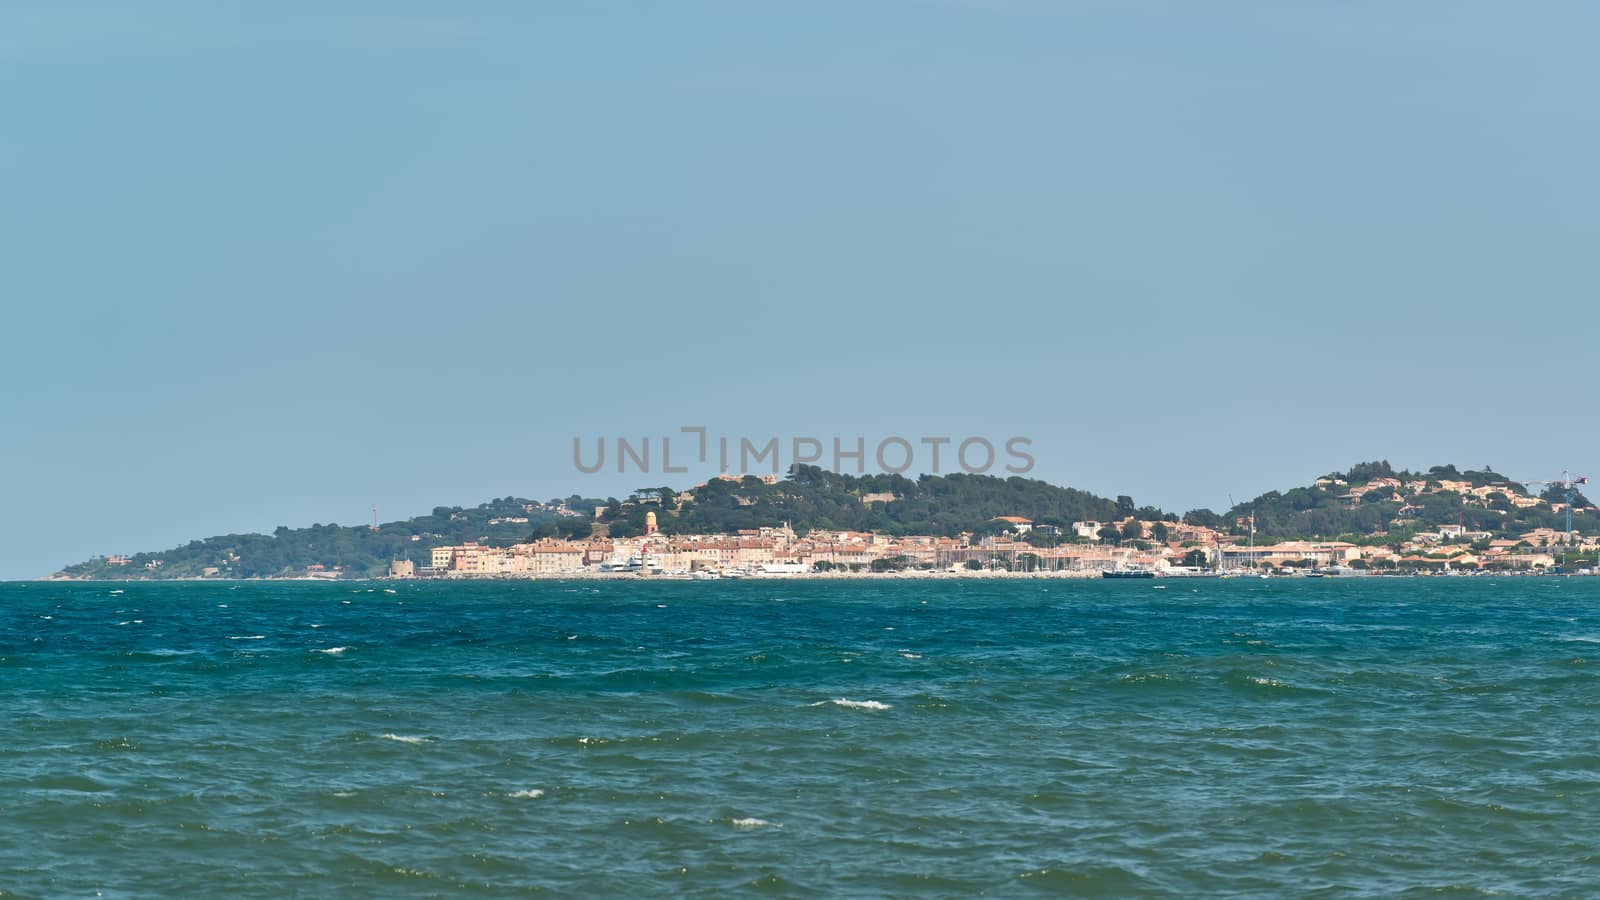 St. Tropez - wiev from the sea by furzyk73